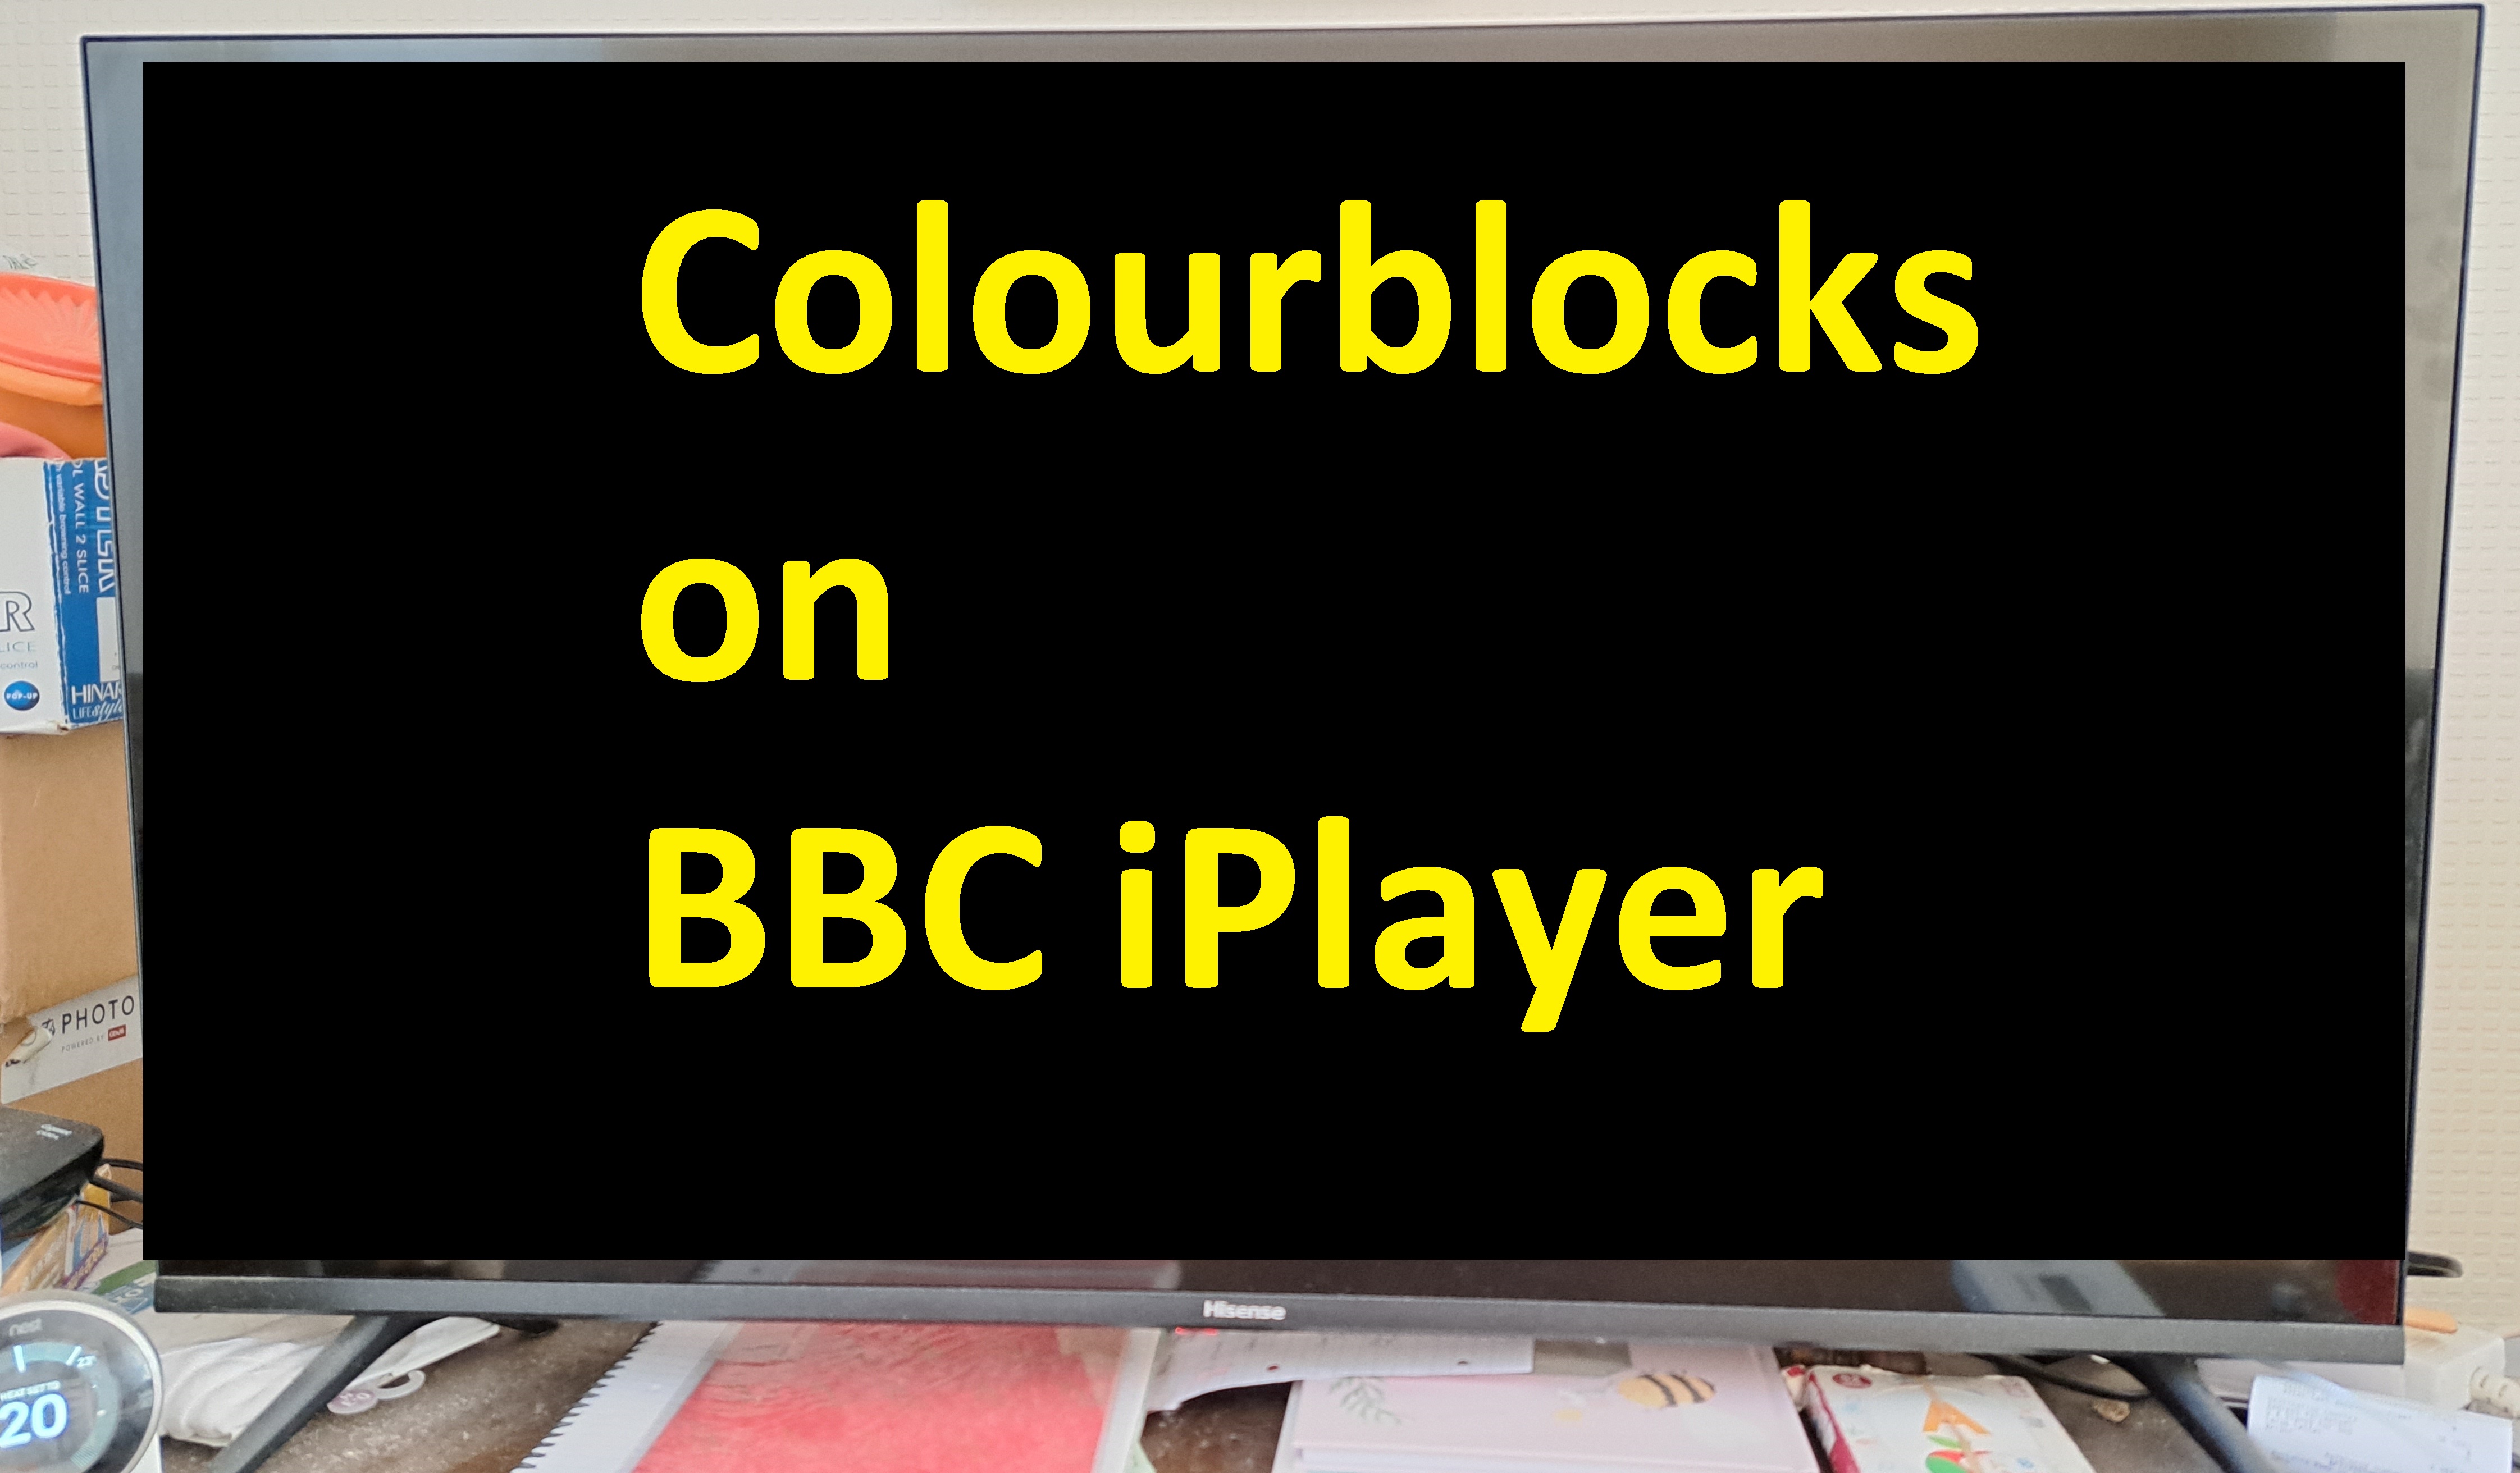 Colourblocks on BBC iPlayer